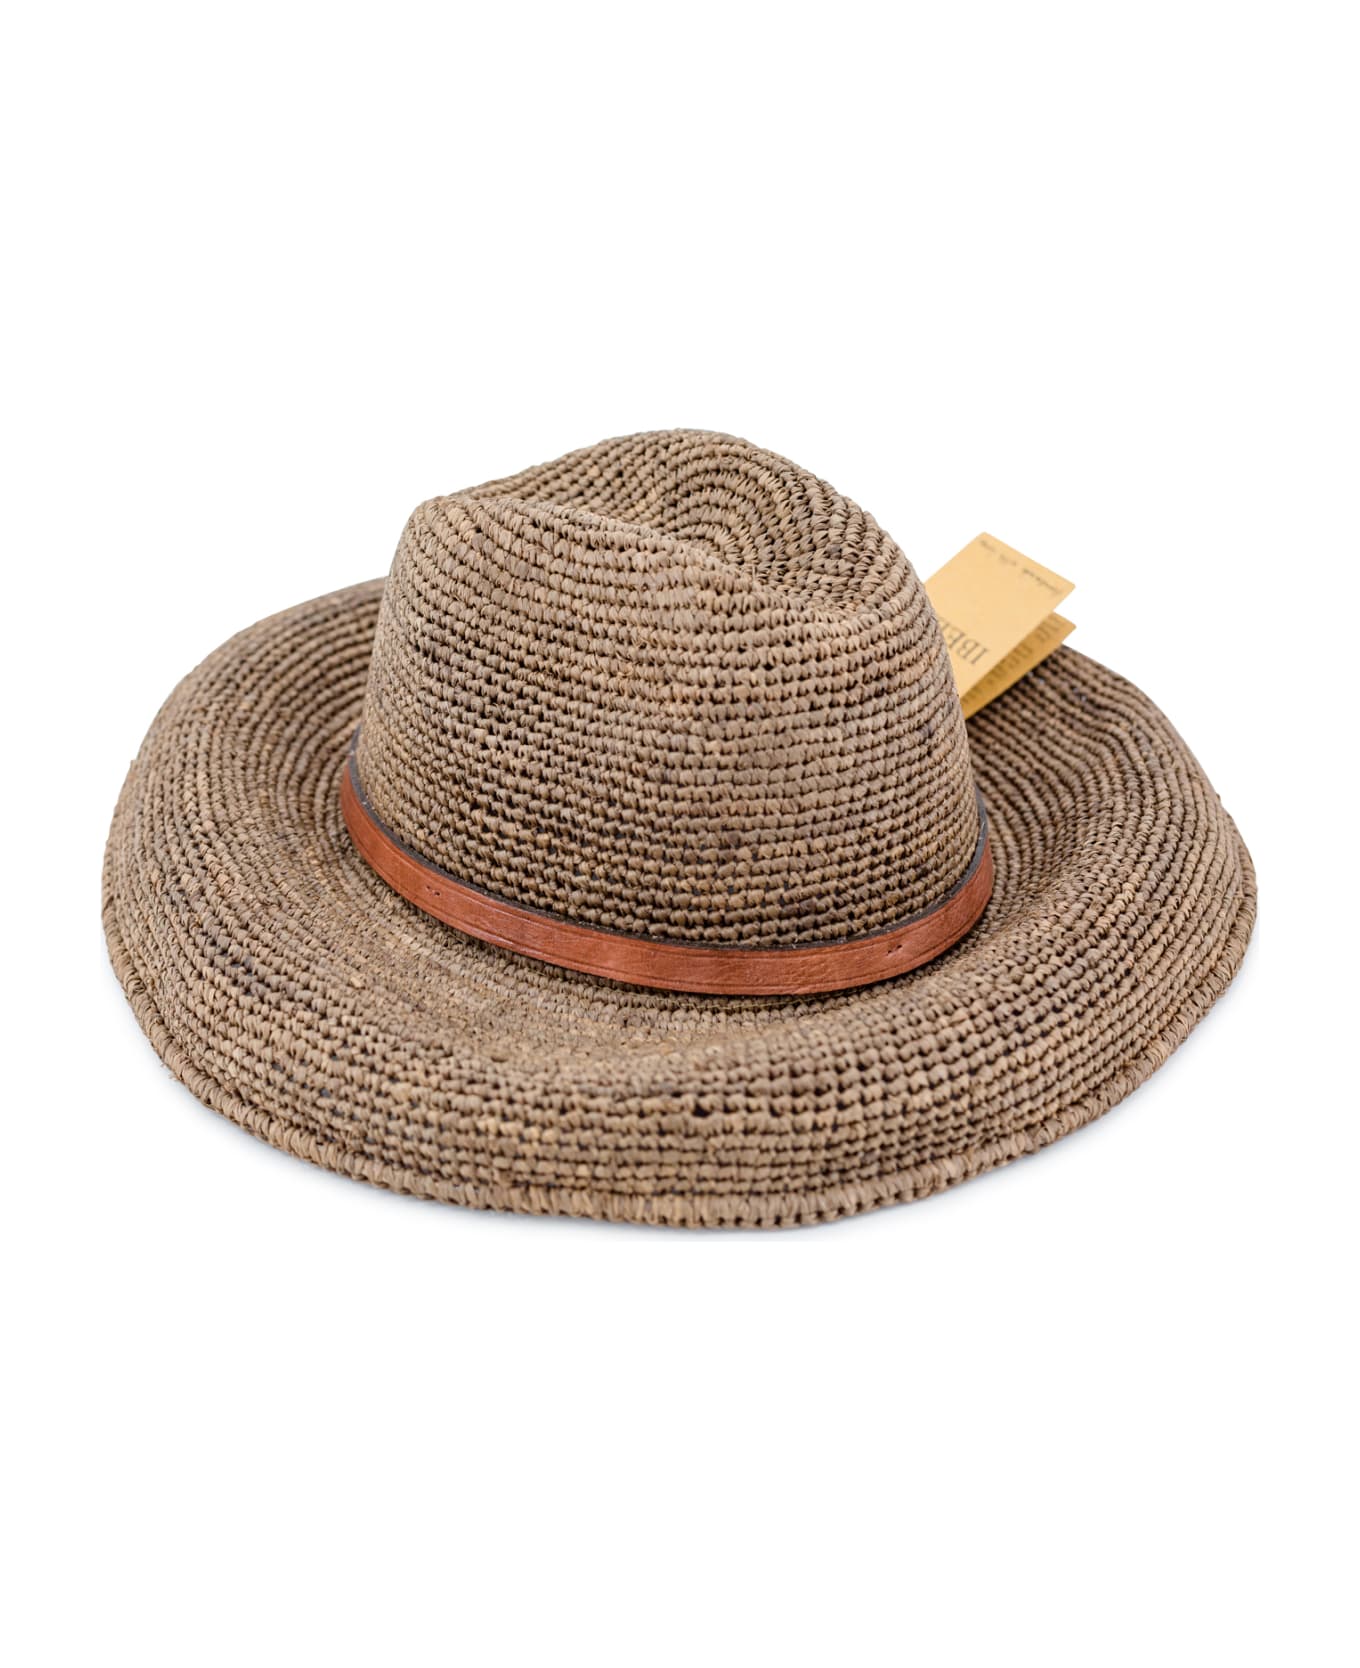 Ibeliv Safari Woven Straw Hat - Tea